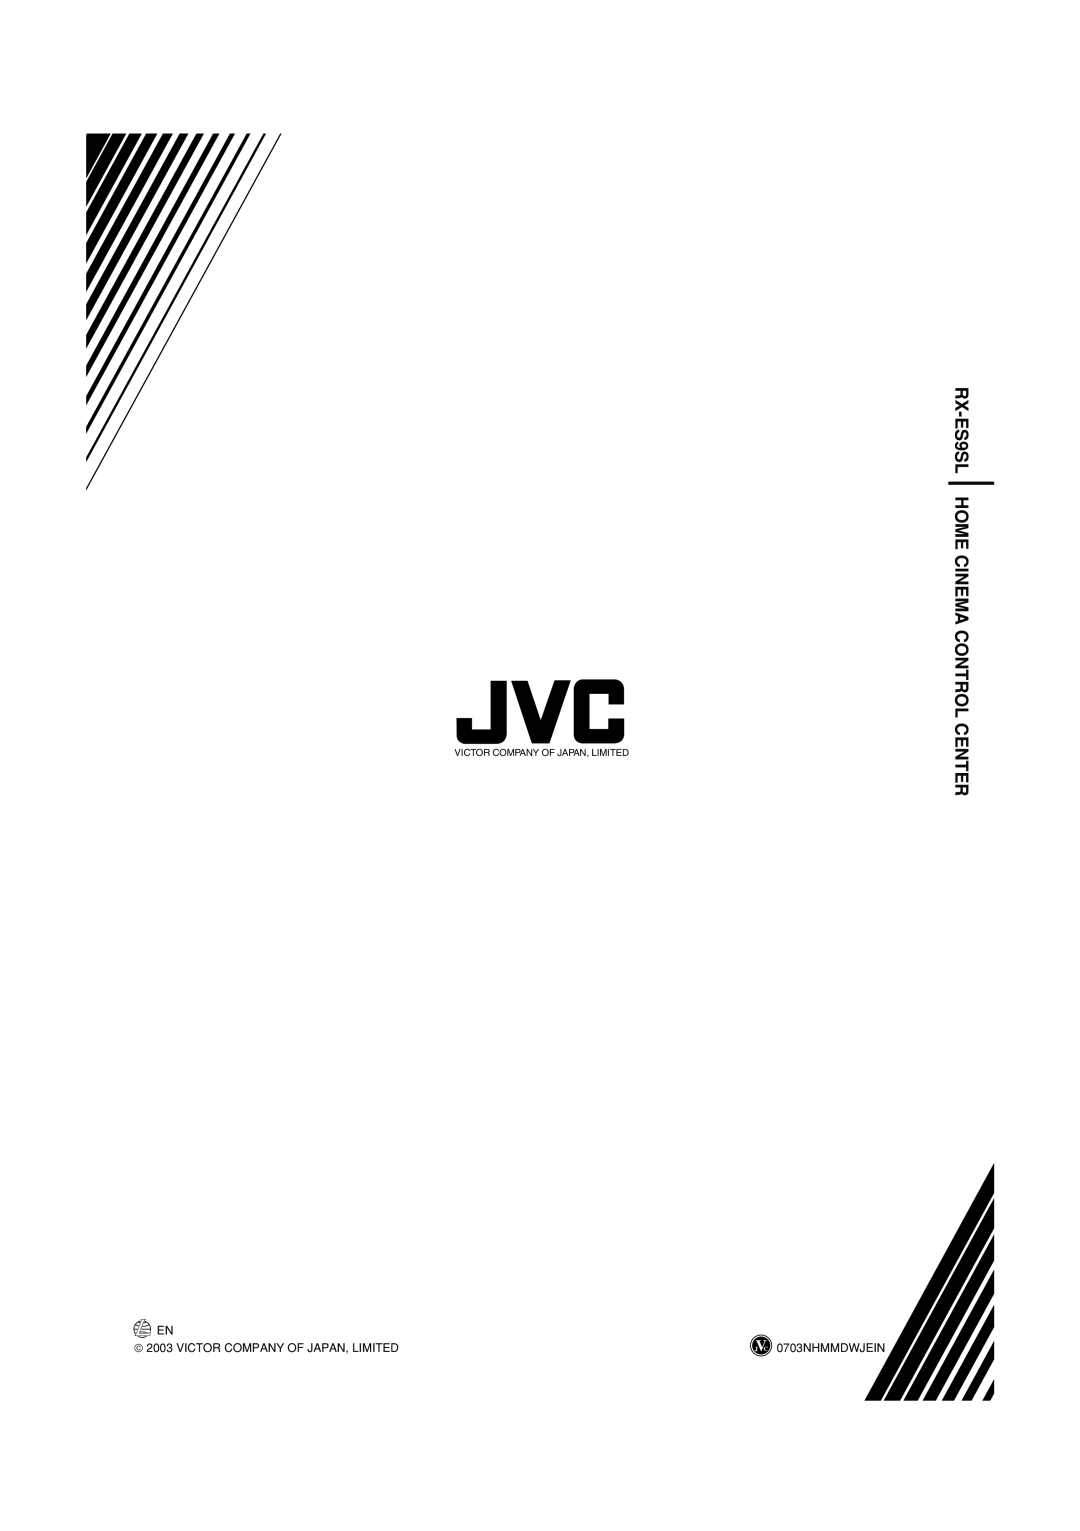 JVC LVT1112-001A manual RX-ES9SL HOME CINEMA CONTROL CENTER,  2003 VICTOR COMPANY OF JAPAN, LIMITED, 0703NHMMDWJEIN 